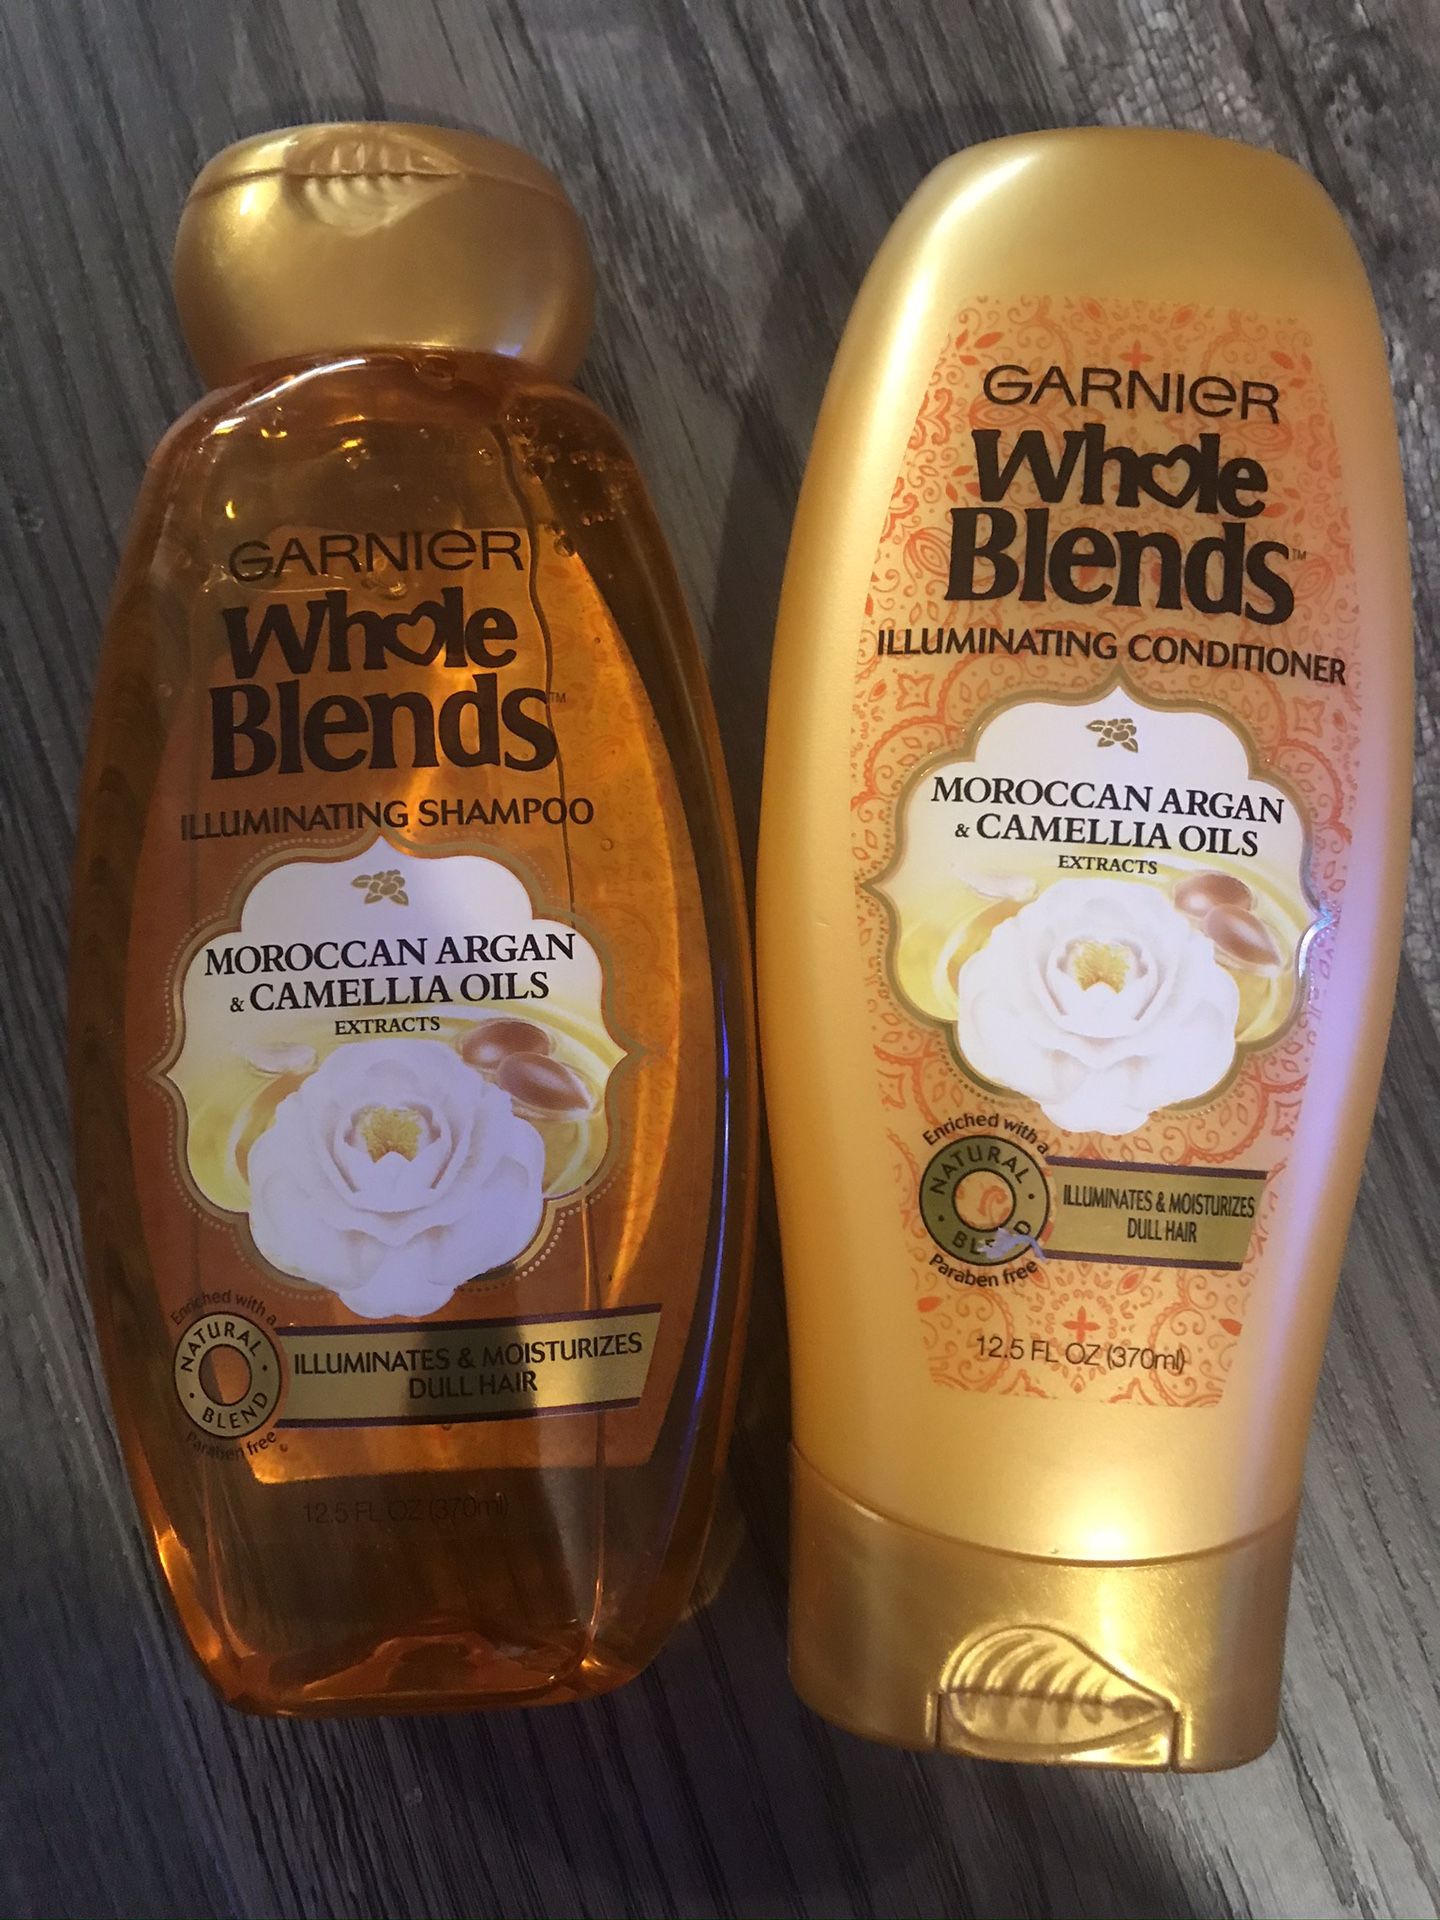 Garnier whole blends Moroccan Argan & camellia oil shampoo and conditioner set